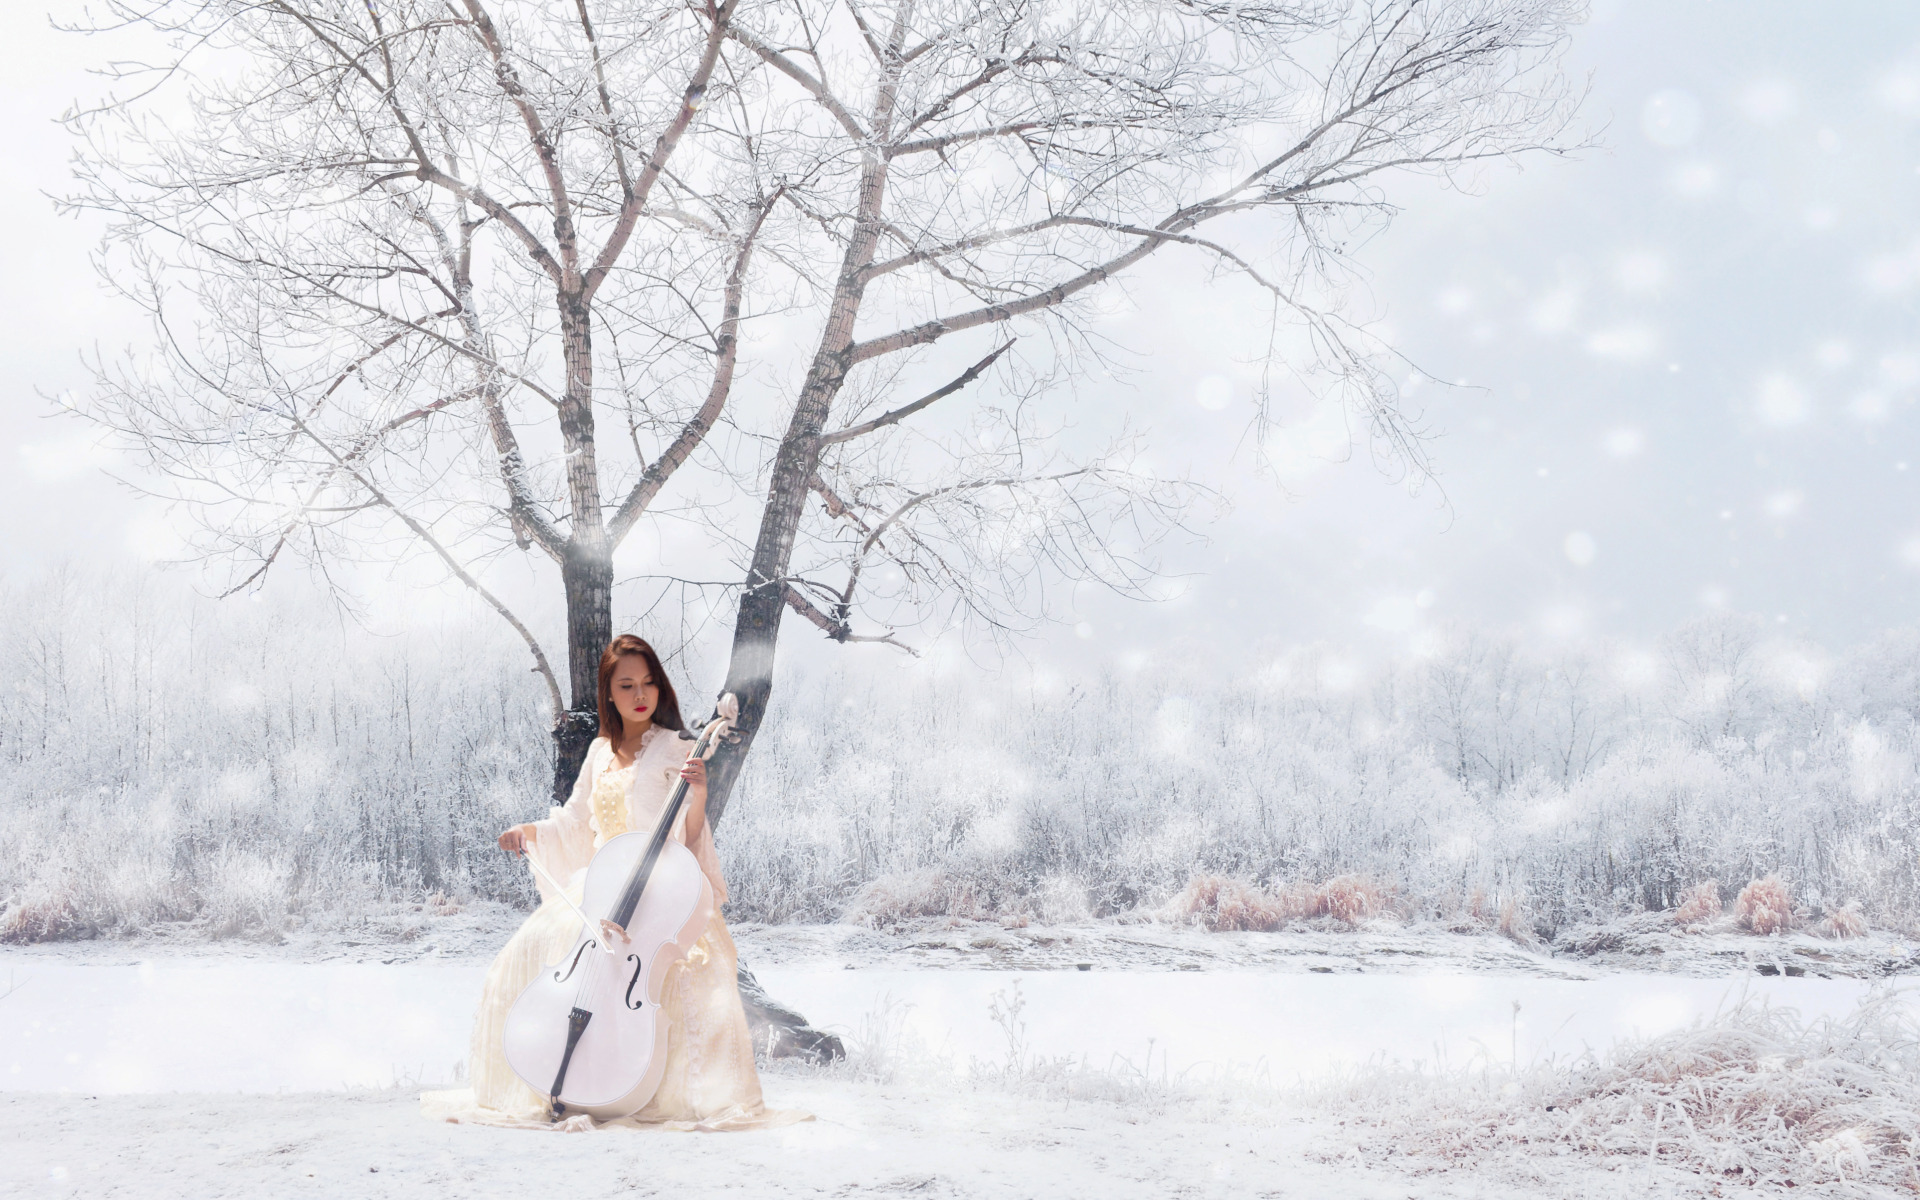 Зима музыка автор. Девушка на зимнем пейзаже. Девушка в зимнем лесу. Девушка зимой в снегу. Jason van Wyk Winter.